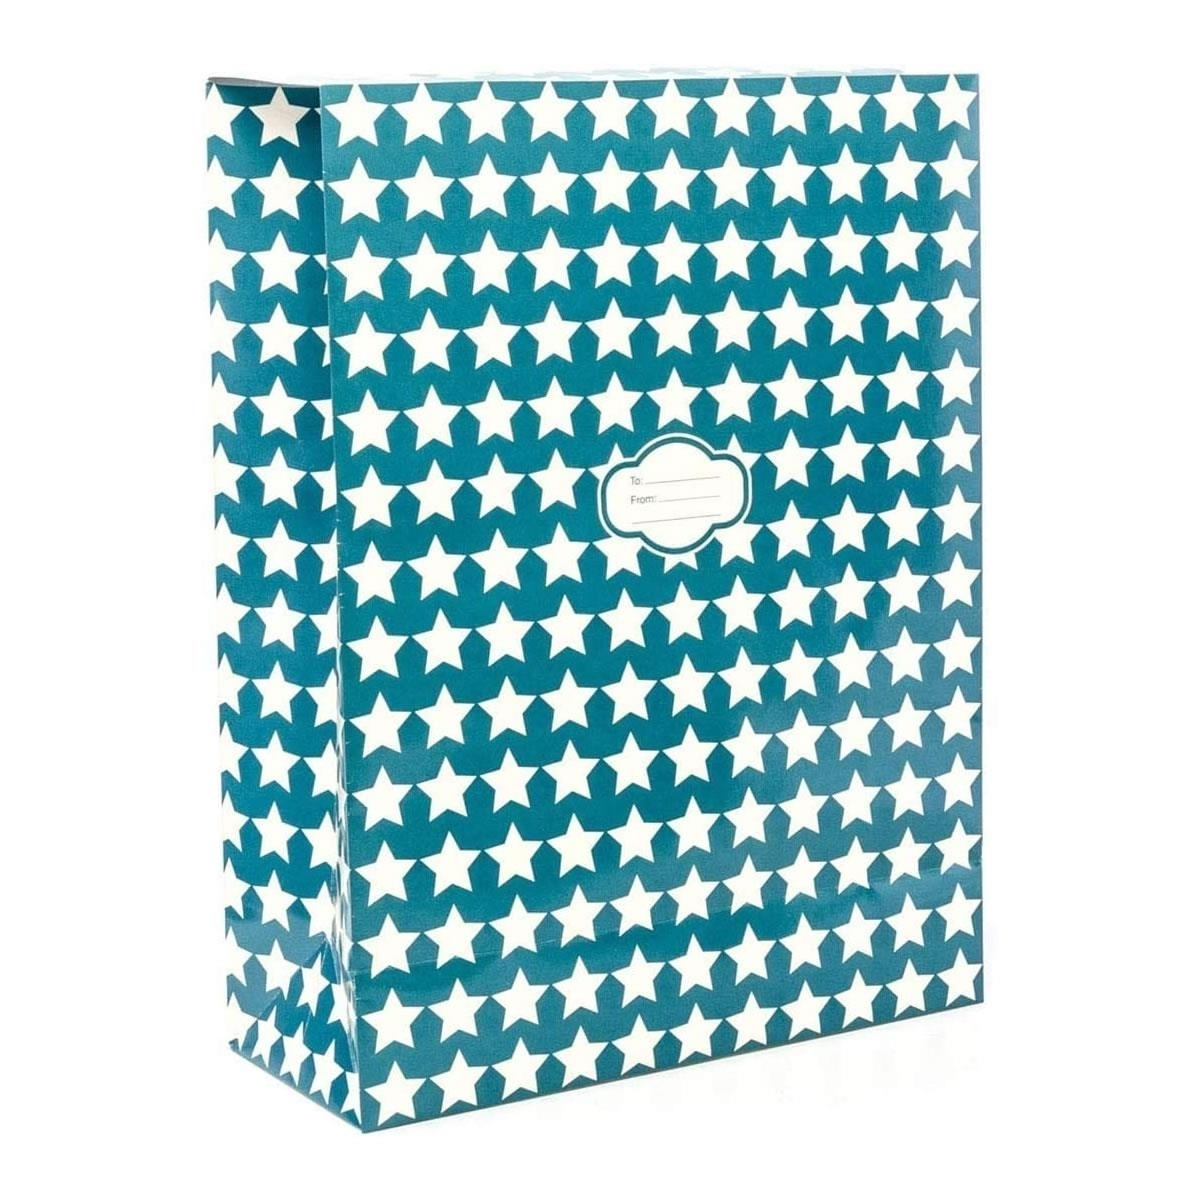 Pressie Pouch Peel & Seal Gift Bag Blue Stars 12pk Small No-Wrap Present